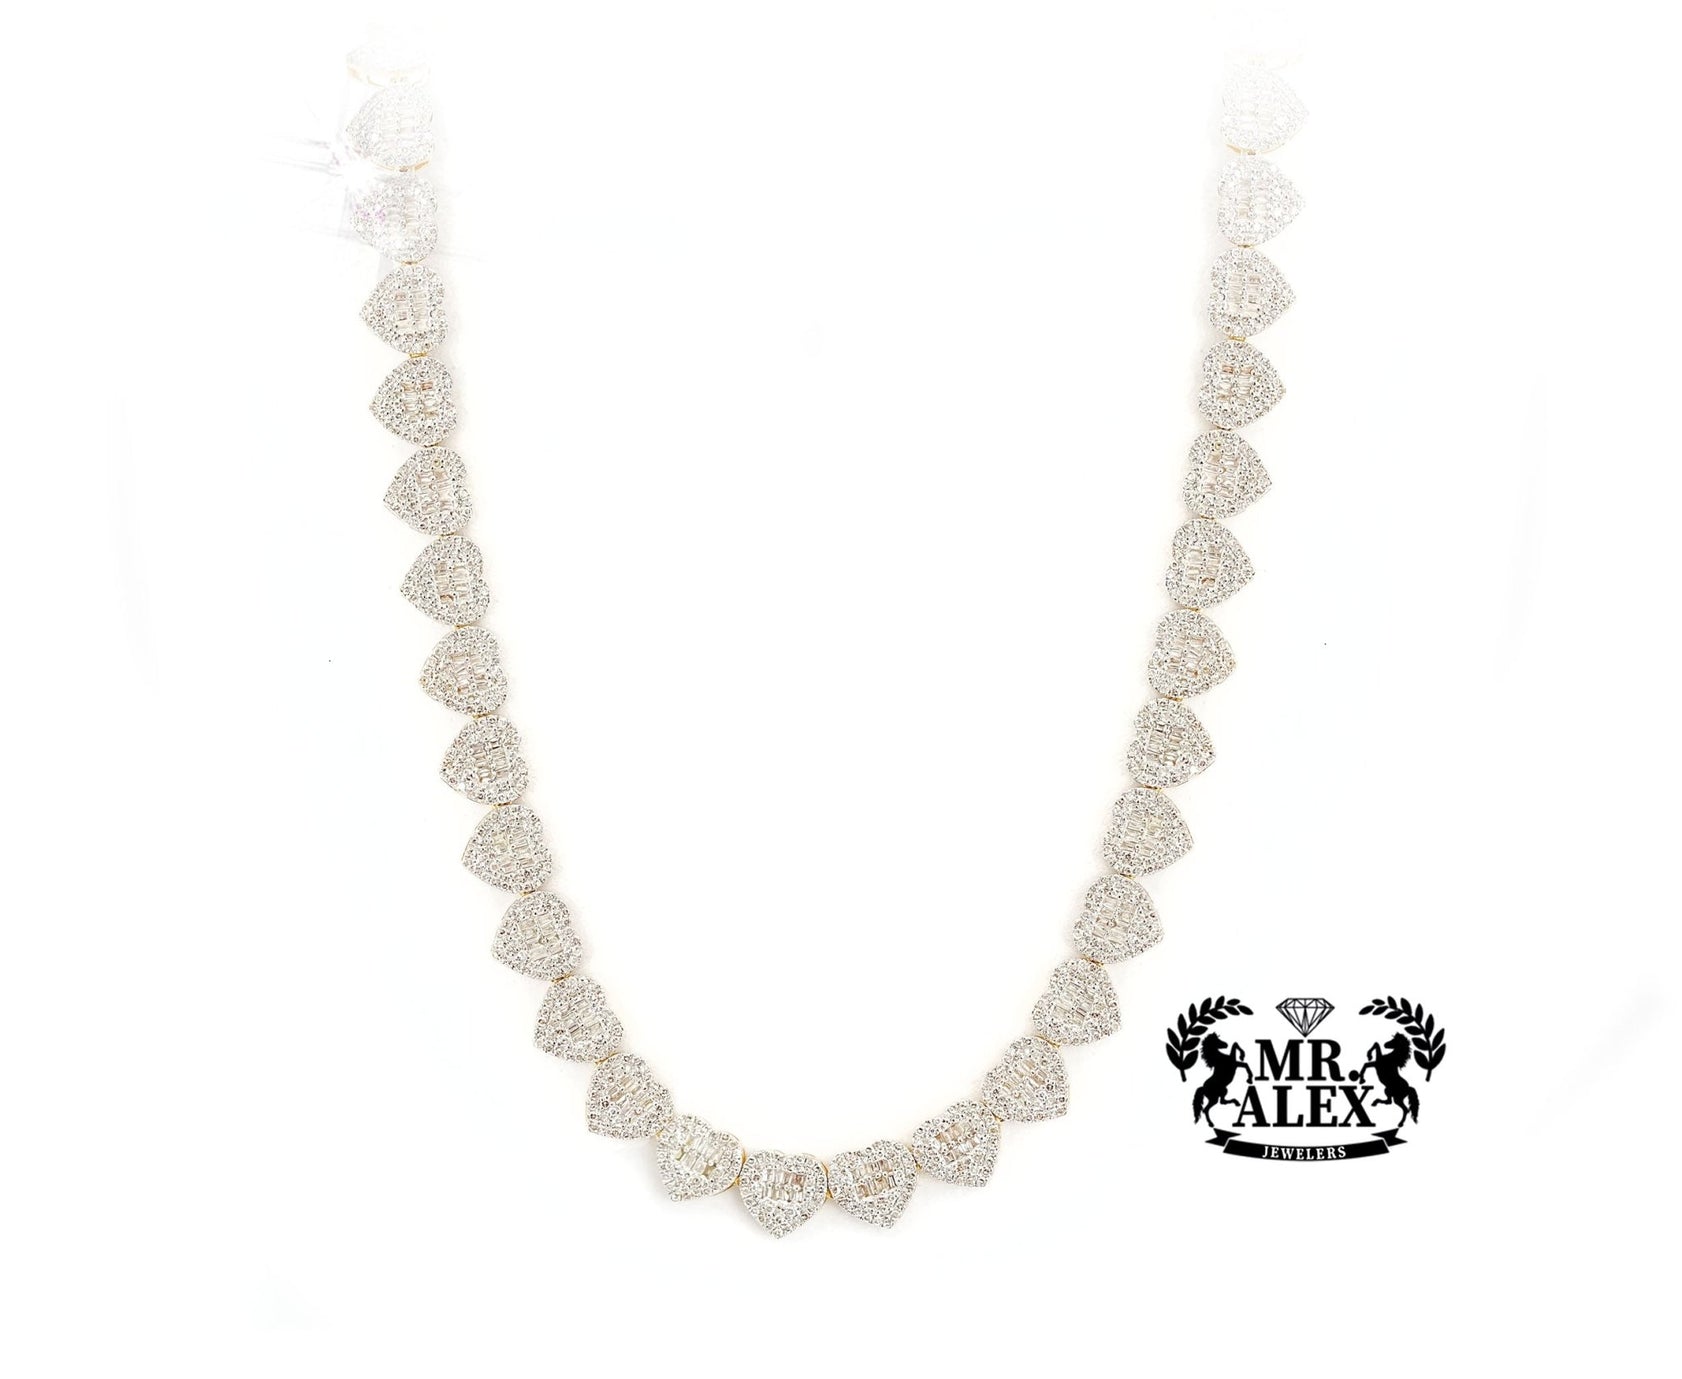 10K Heart-Shaped Diamond Necklace 8.45ct - Mr. Alex Jewelry